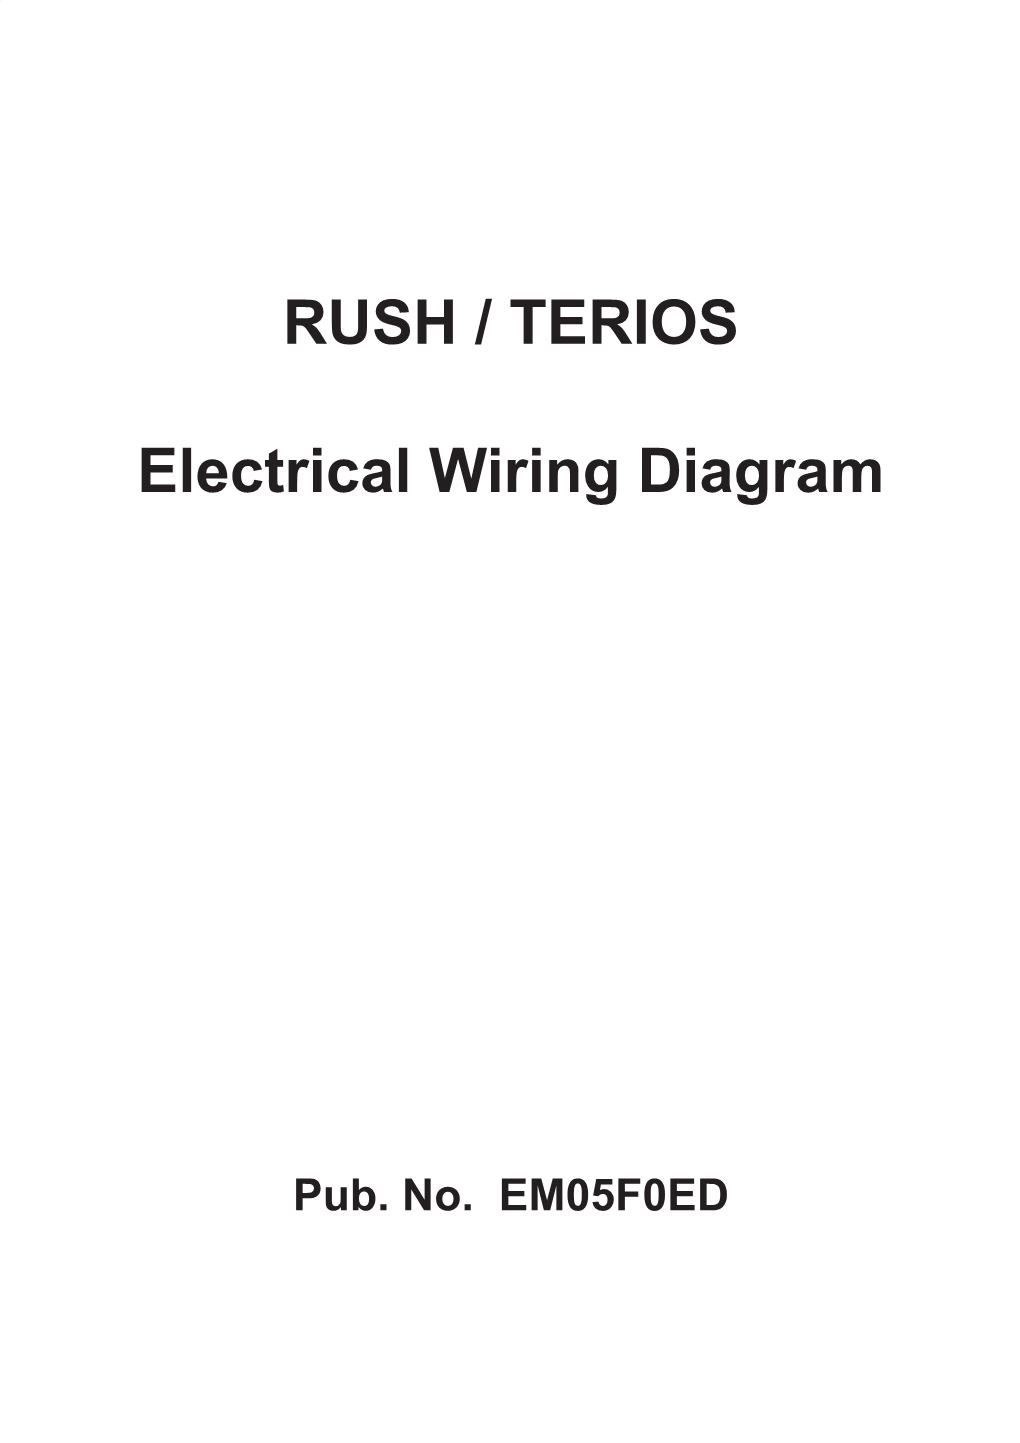 Rush / Terios Electrical Wiring Diagram